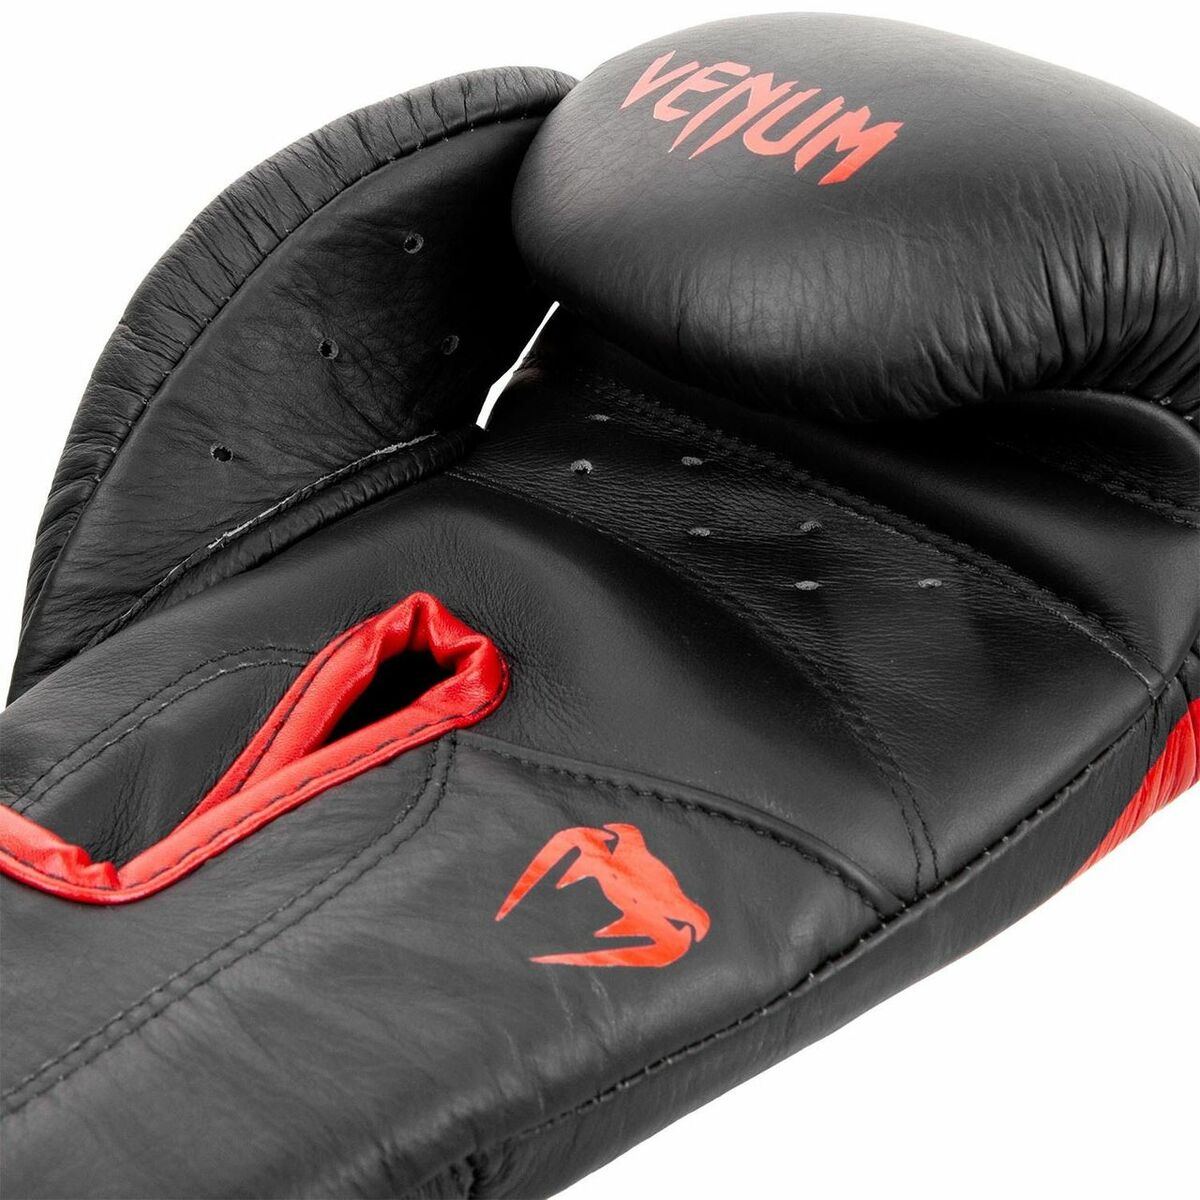 Venum Giant 2.0 Pro Boxing Gloves Black/Red